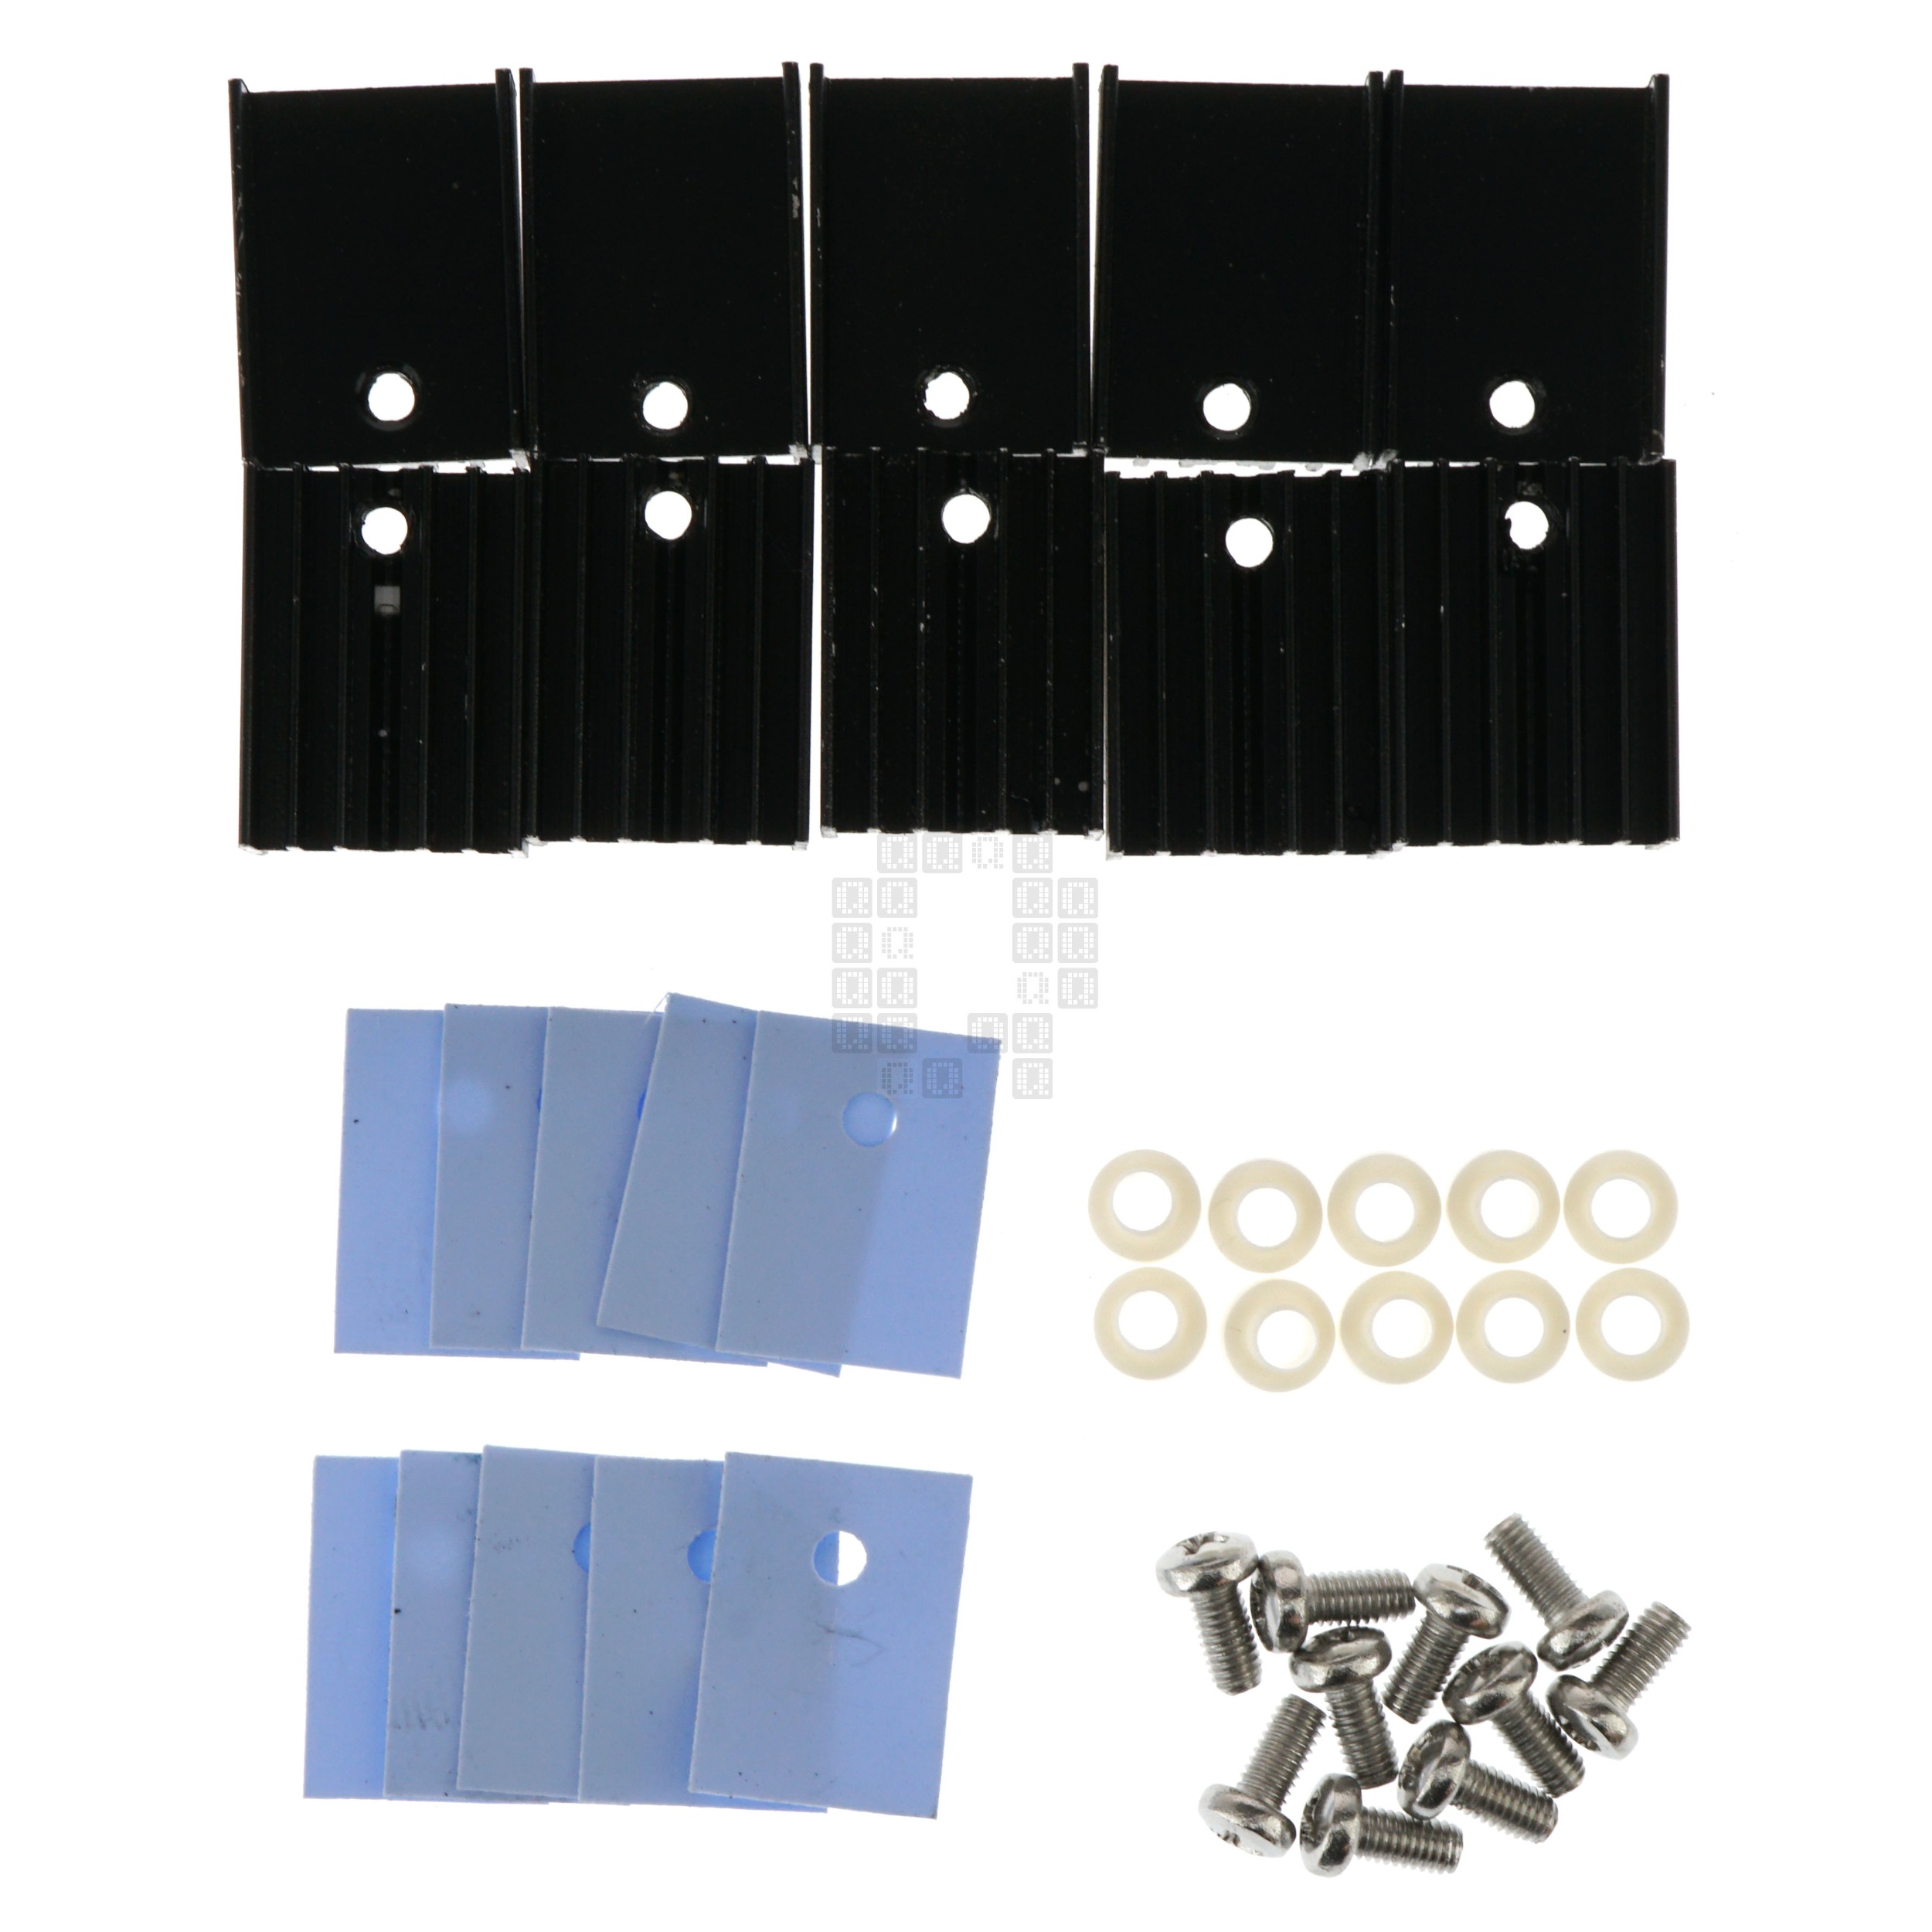 TO-220 Black Aluminum Heatsink Set with Bushings, Pads & Screws, 20x15x10mm, 10 Pack